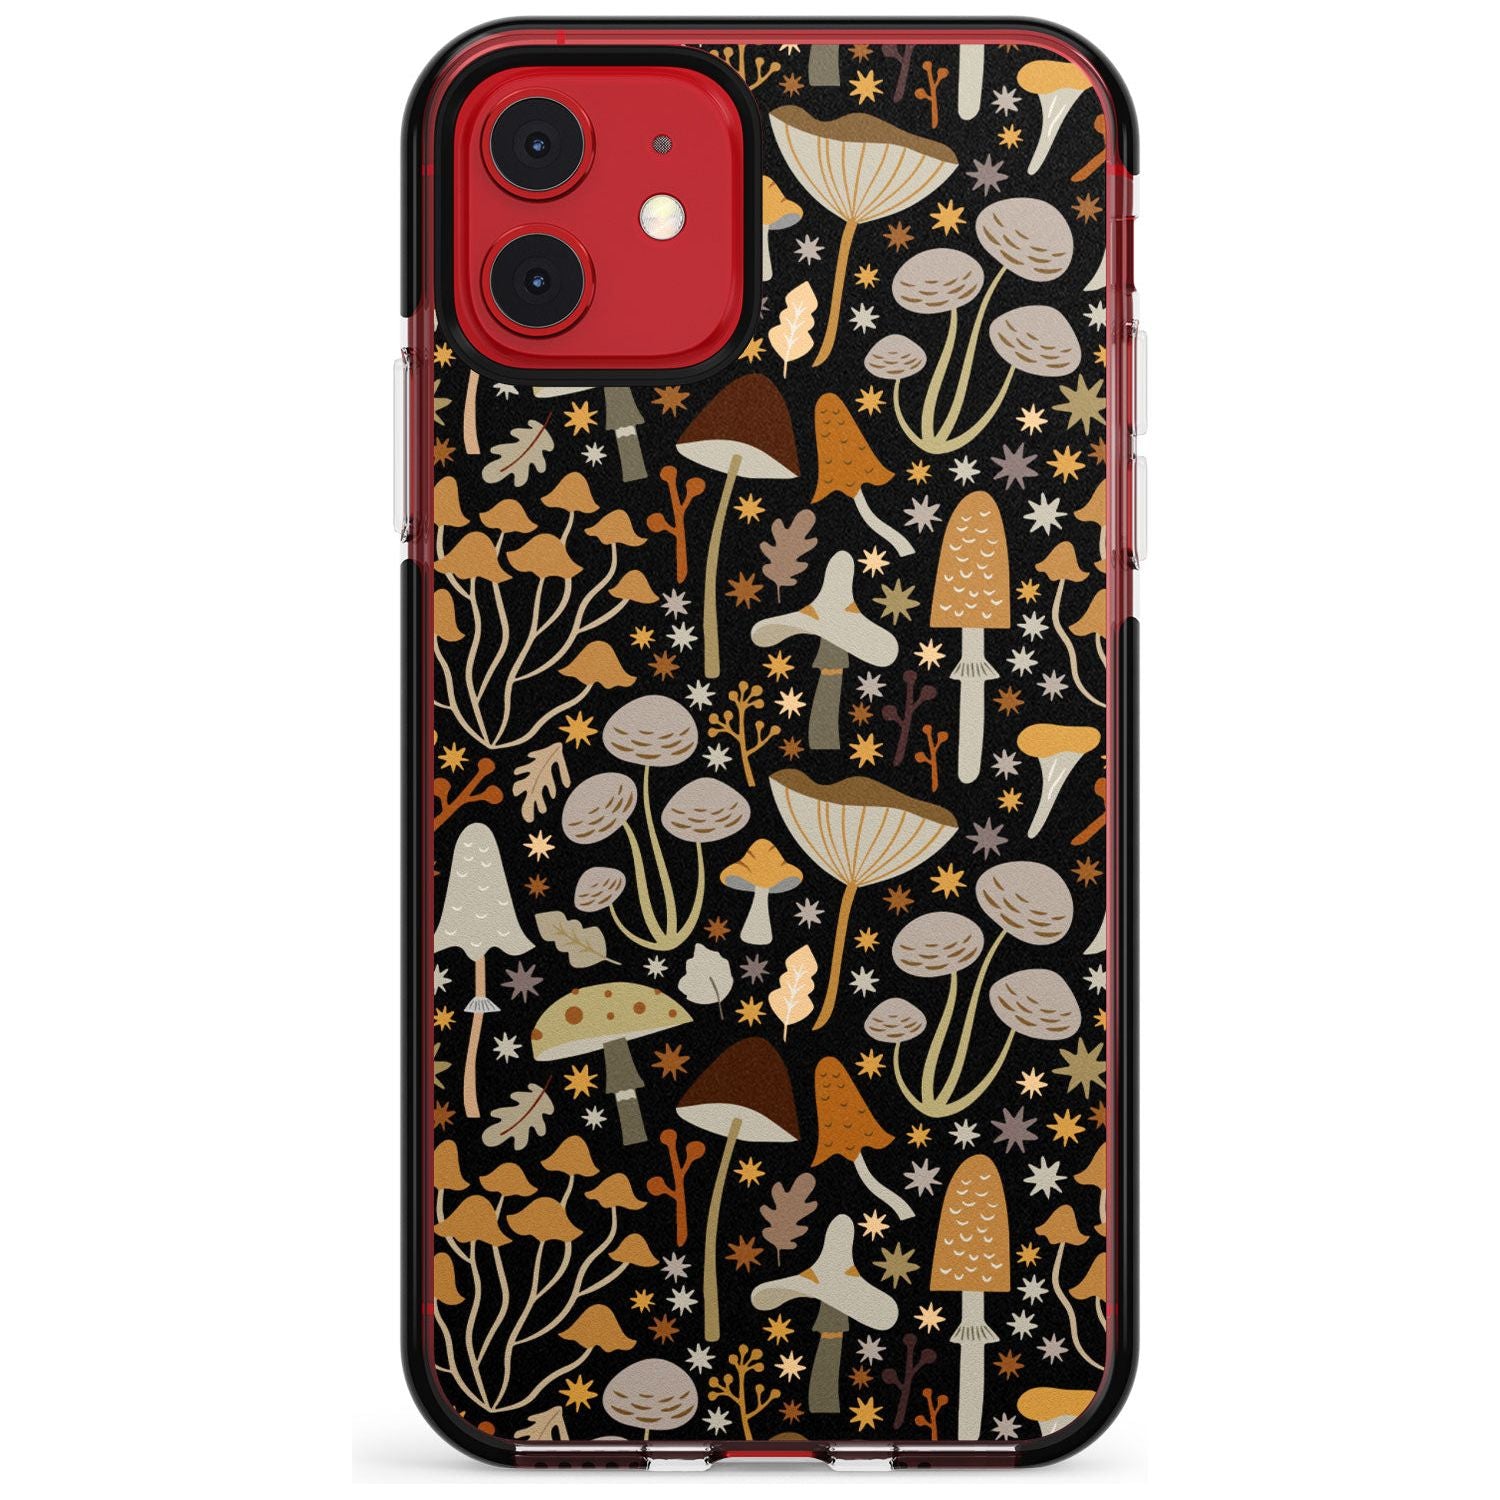 Sentimental Mushrooms Pattern Black Impact Phone Case for iPhone 11 Pro Max